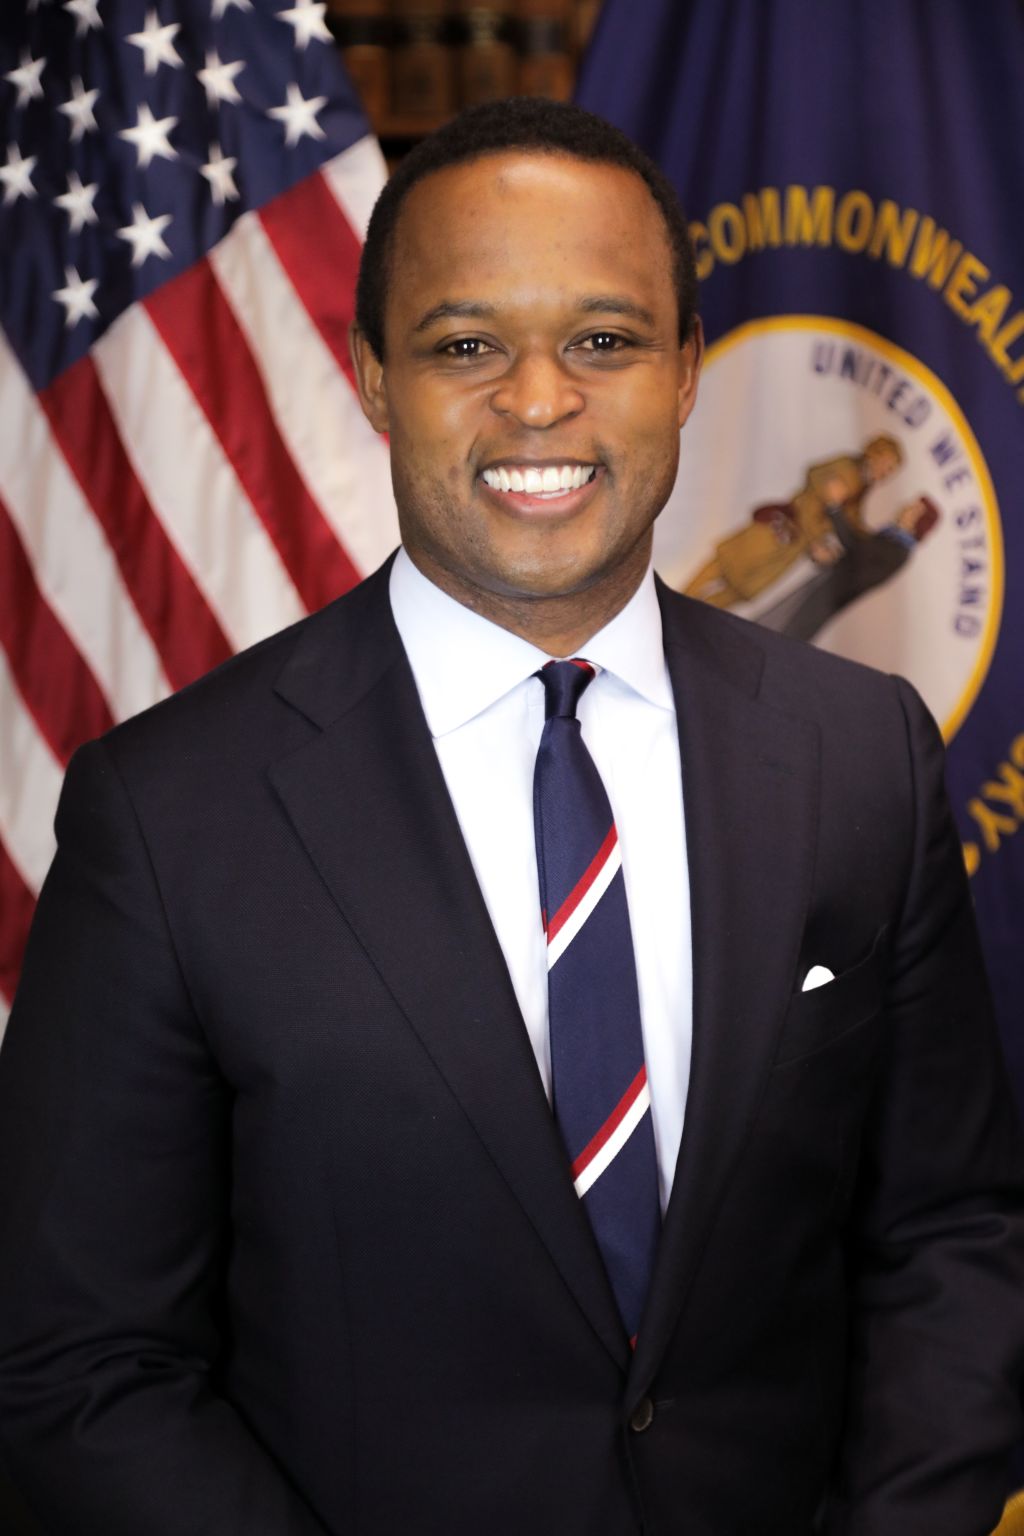 Kentucky Attorney General Daniel Cameron